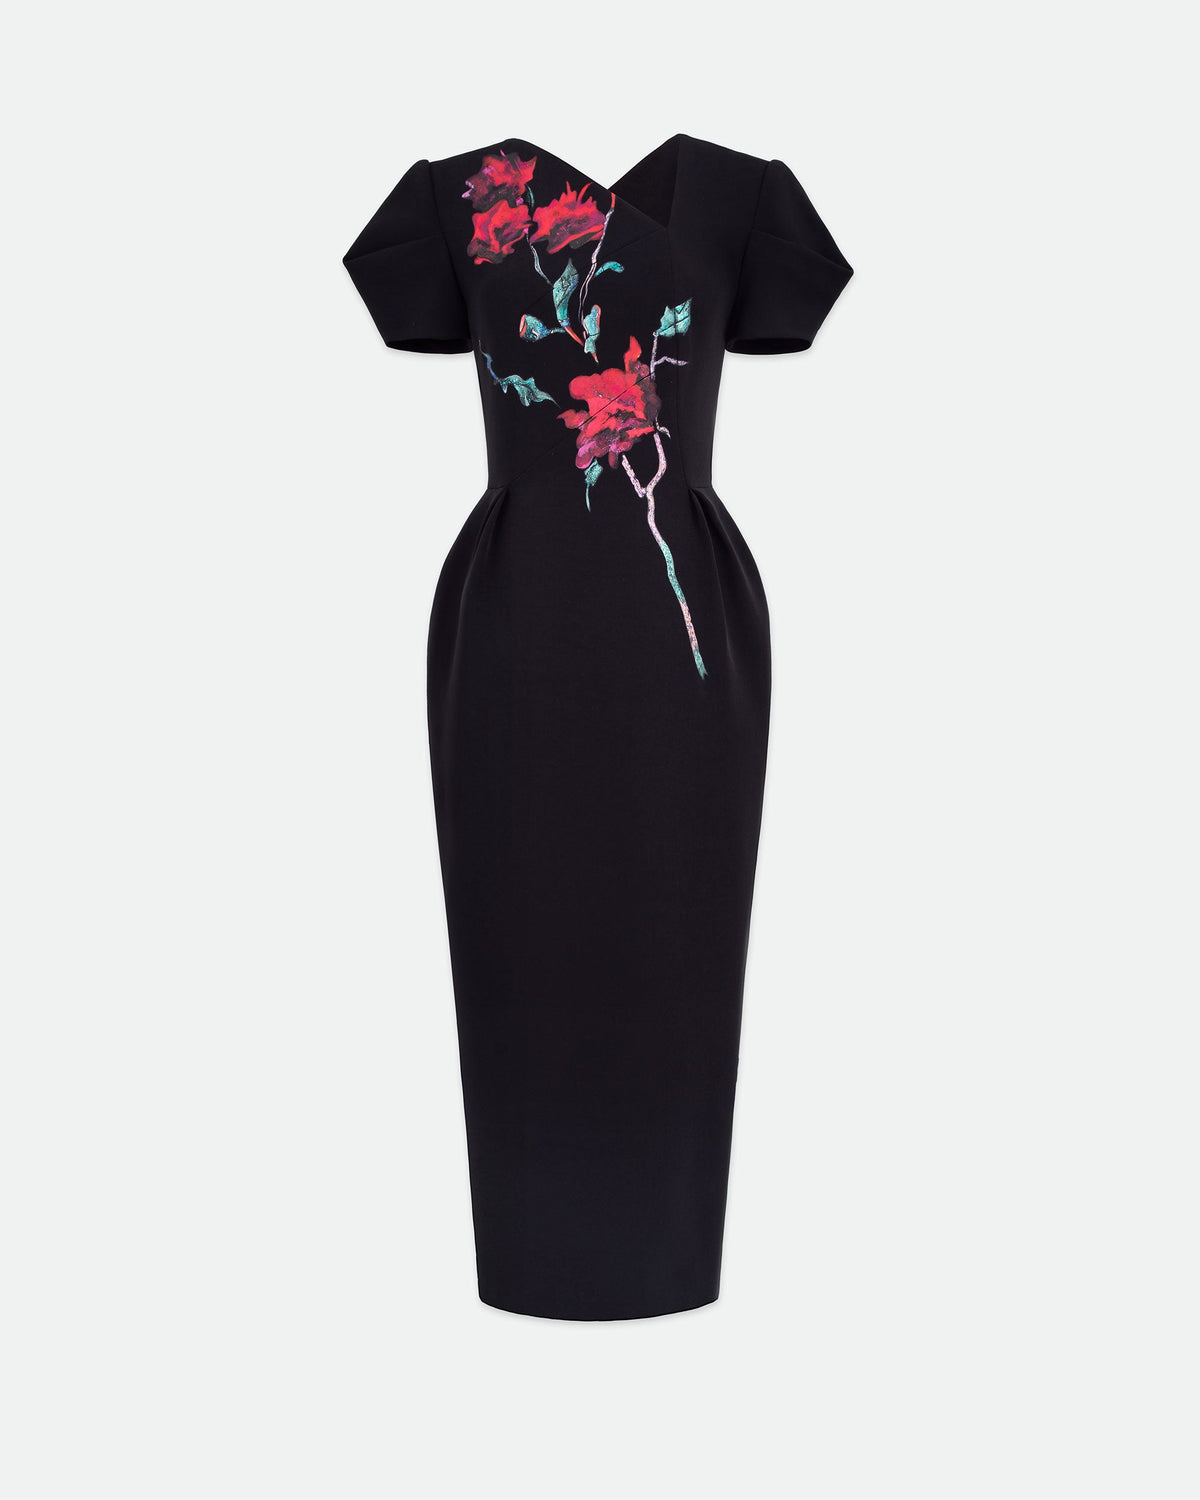 Blossom Noir - Asymmetrical Structured Black Pegged Dress